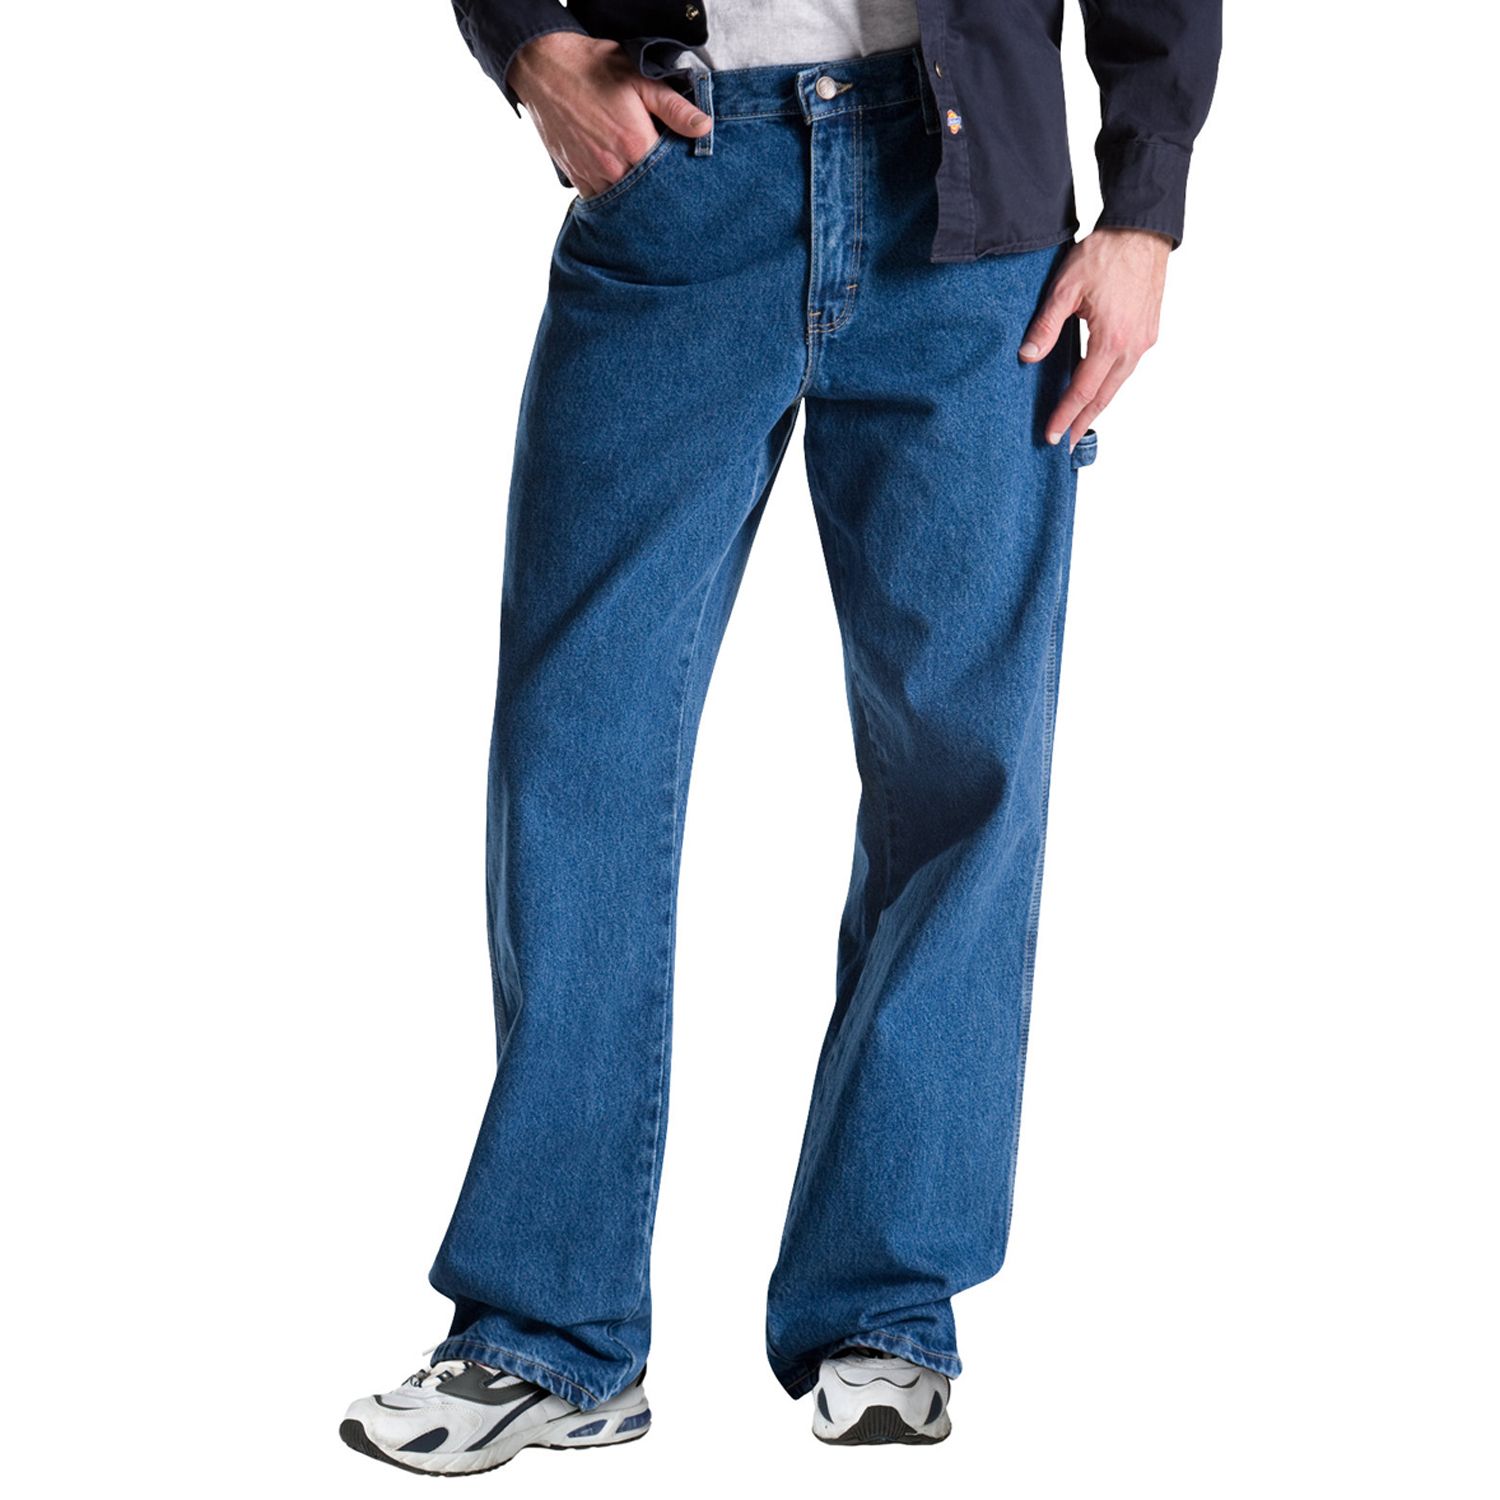 loose carpenter jeans